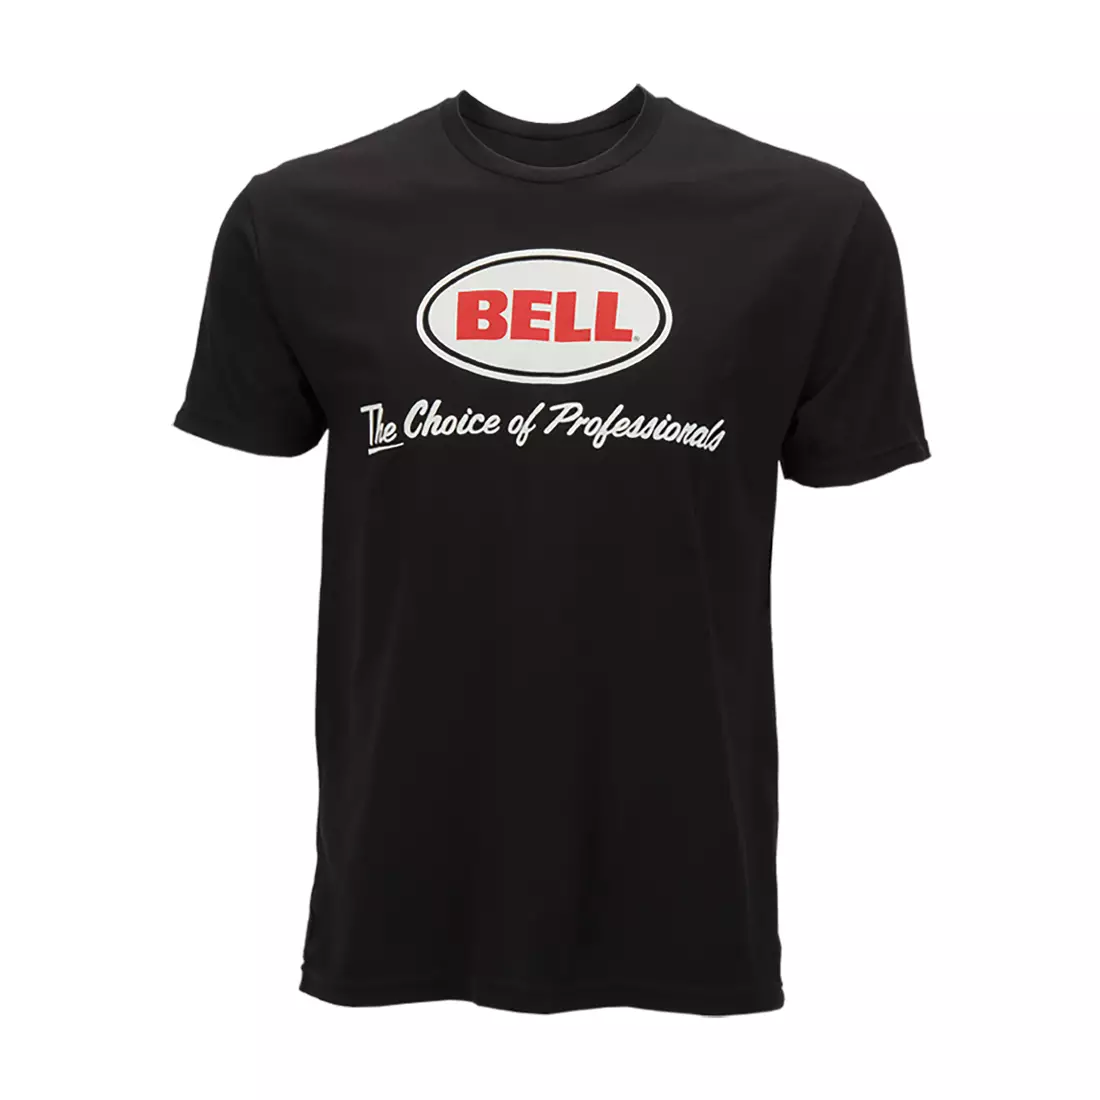 BELL męska koszulka z krótkim rękawem BASIC CHOICE OF PROS black BEL-7070715